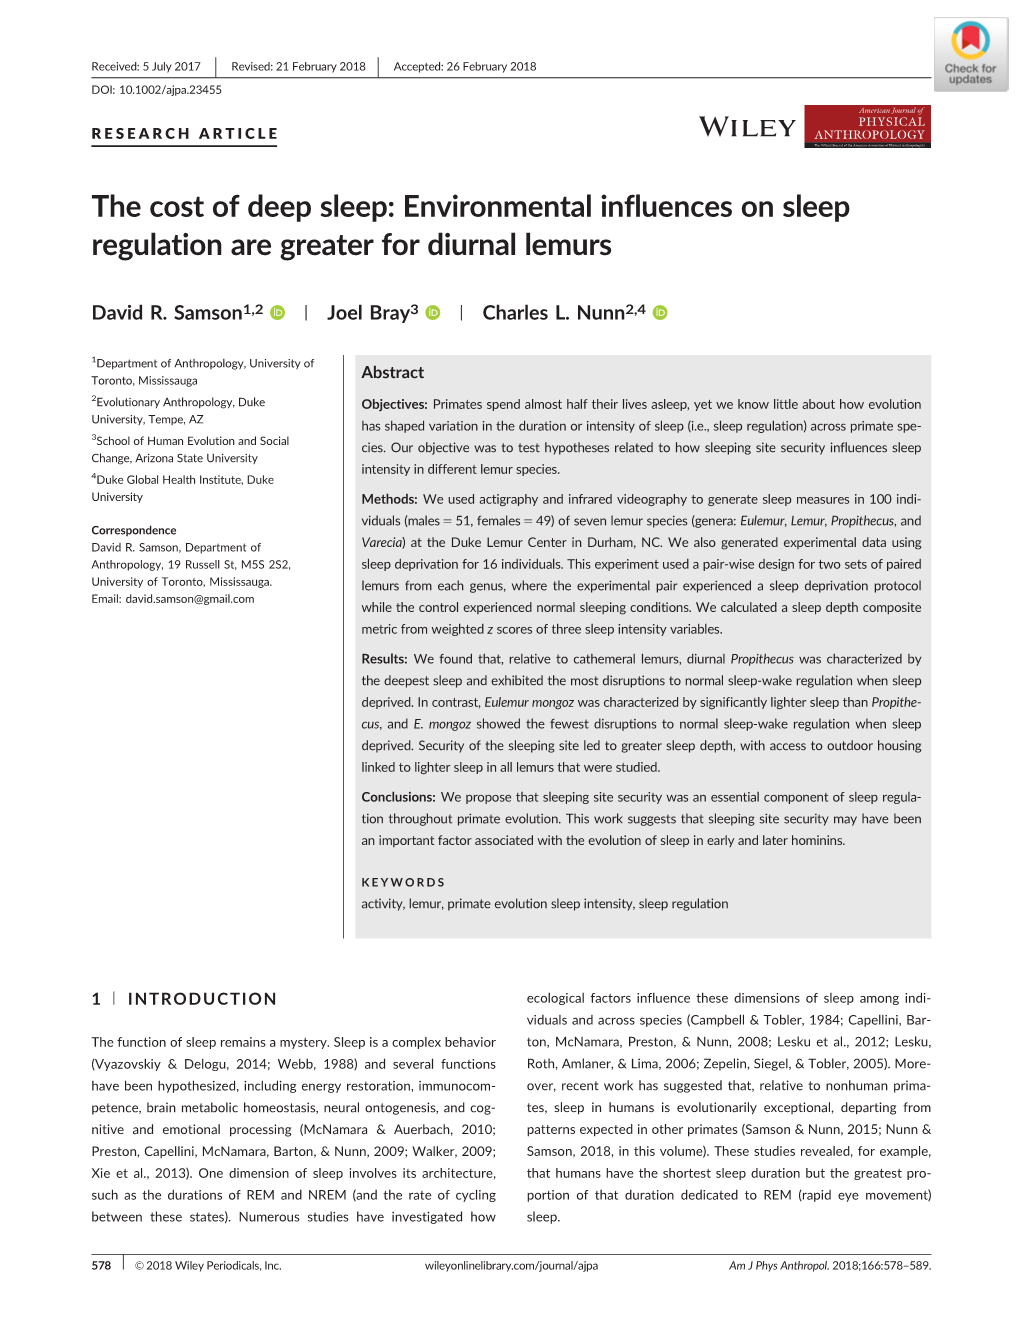 The Cost of Deep Sleep: Environmental Influences on Sleep Regulation Are Greater for Diurnal Lemurs